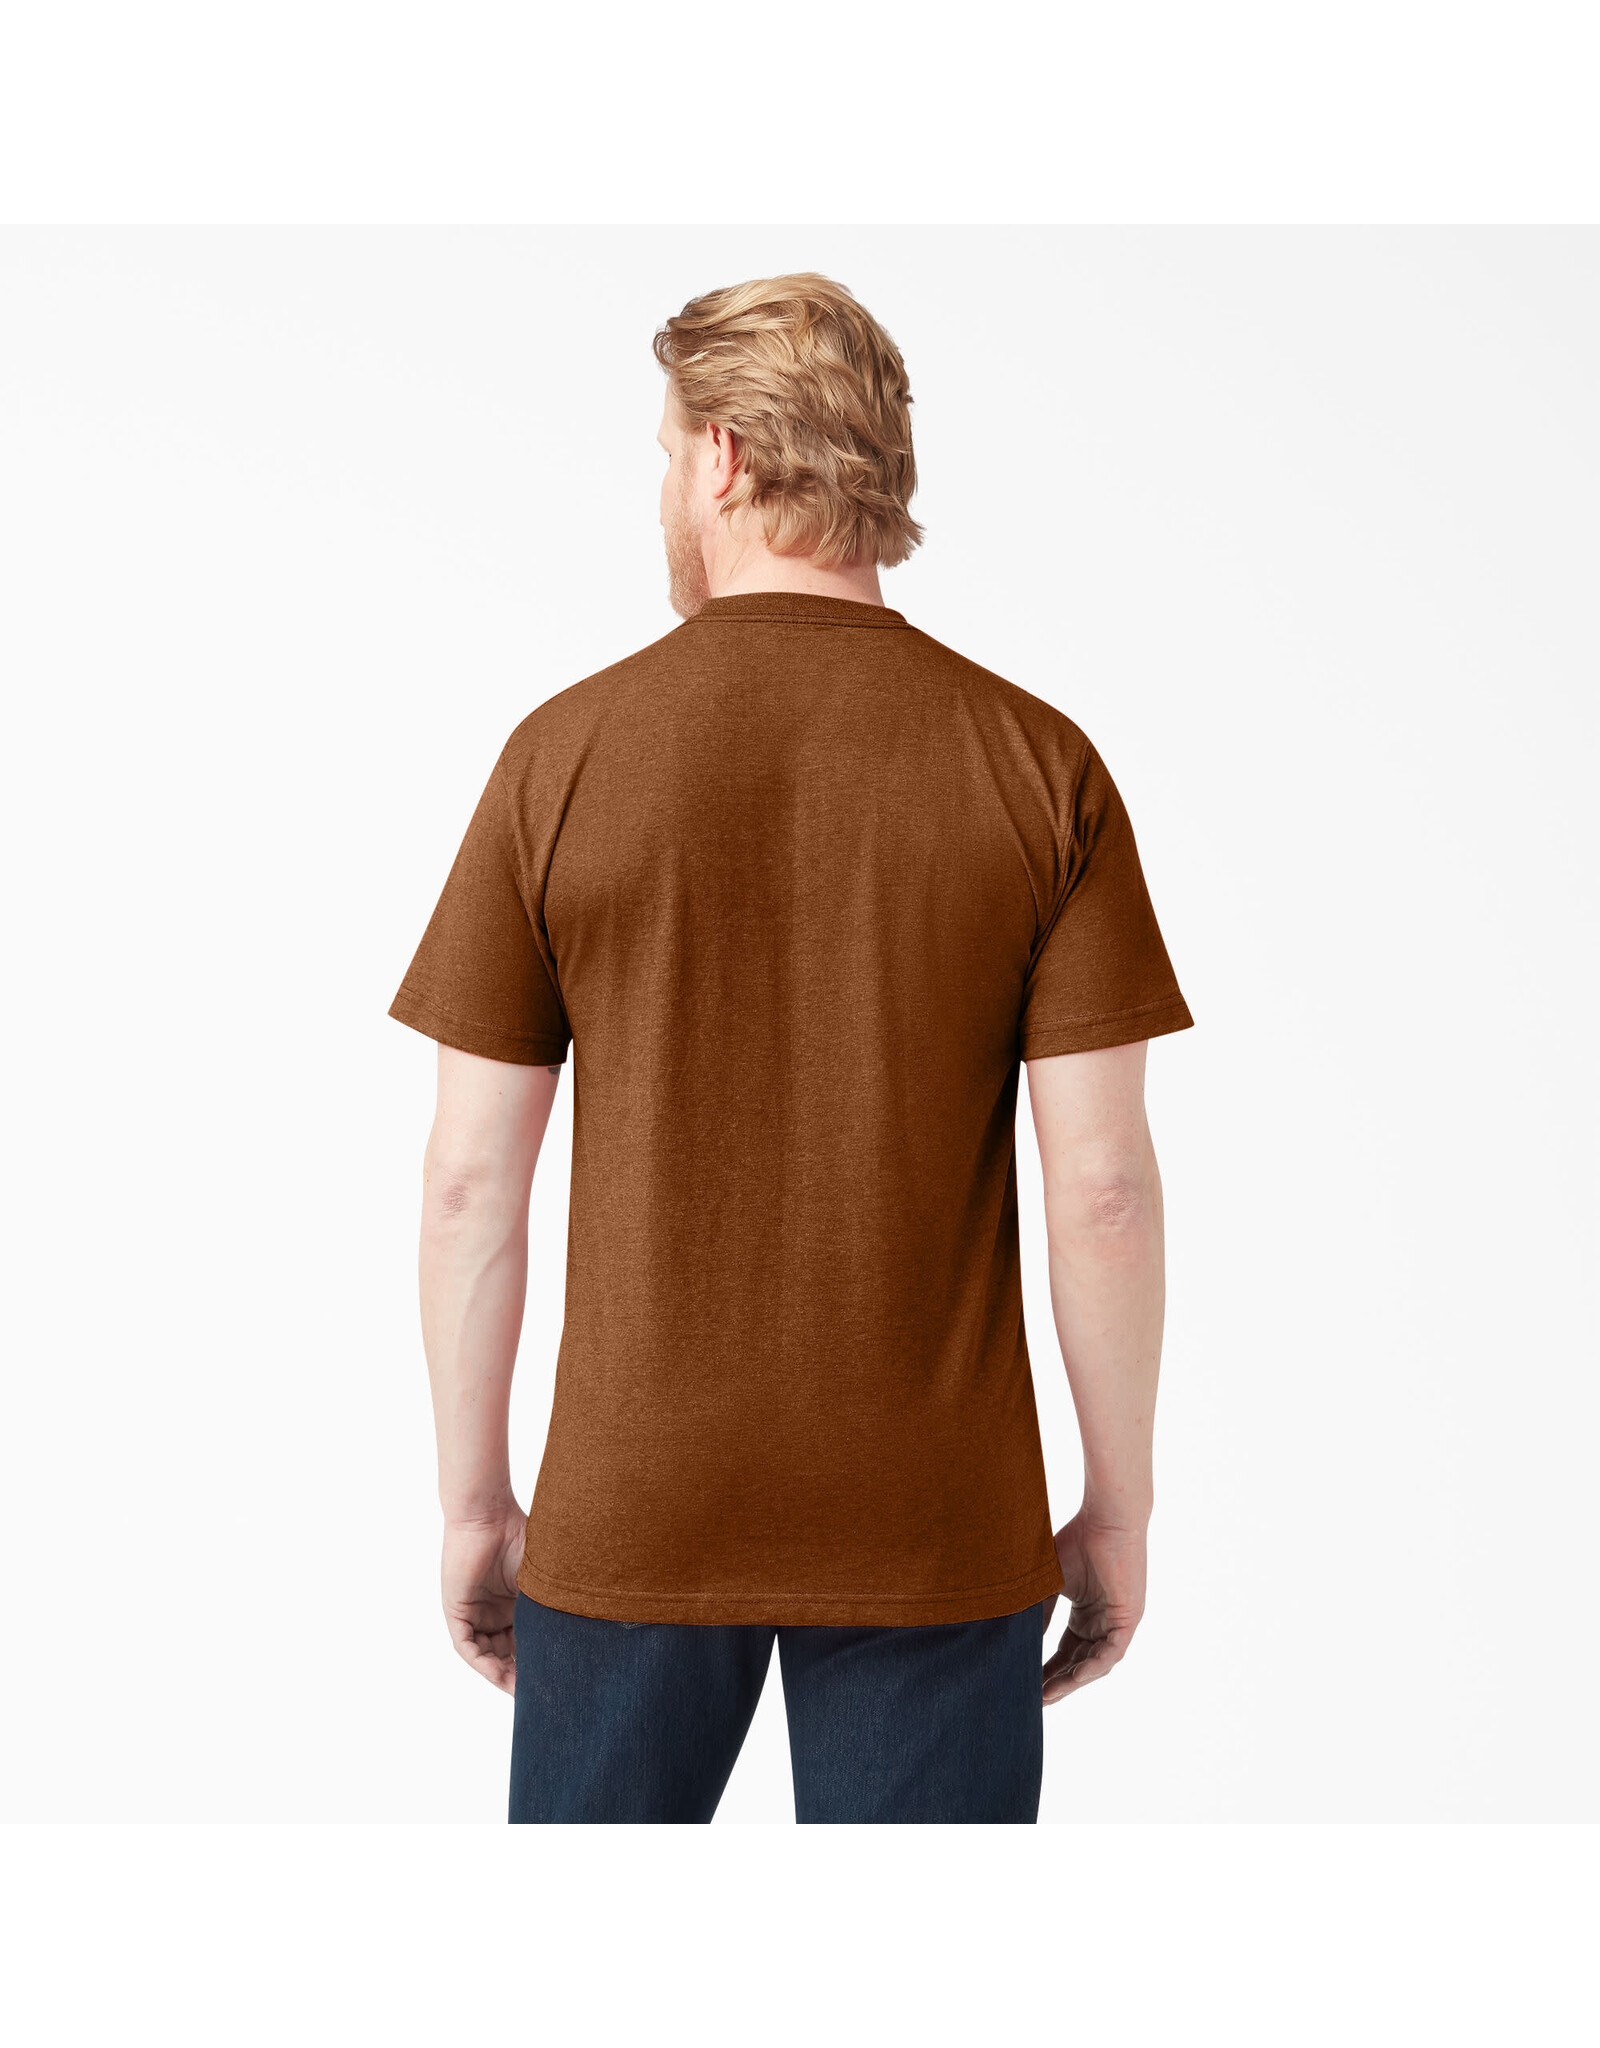 DICKIES Heavyweight Heathered Short Sleeve Pocket T-Shirt Copper Heather - WS450HEH2